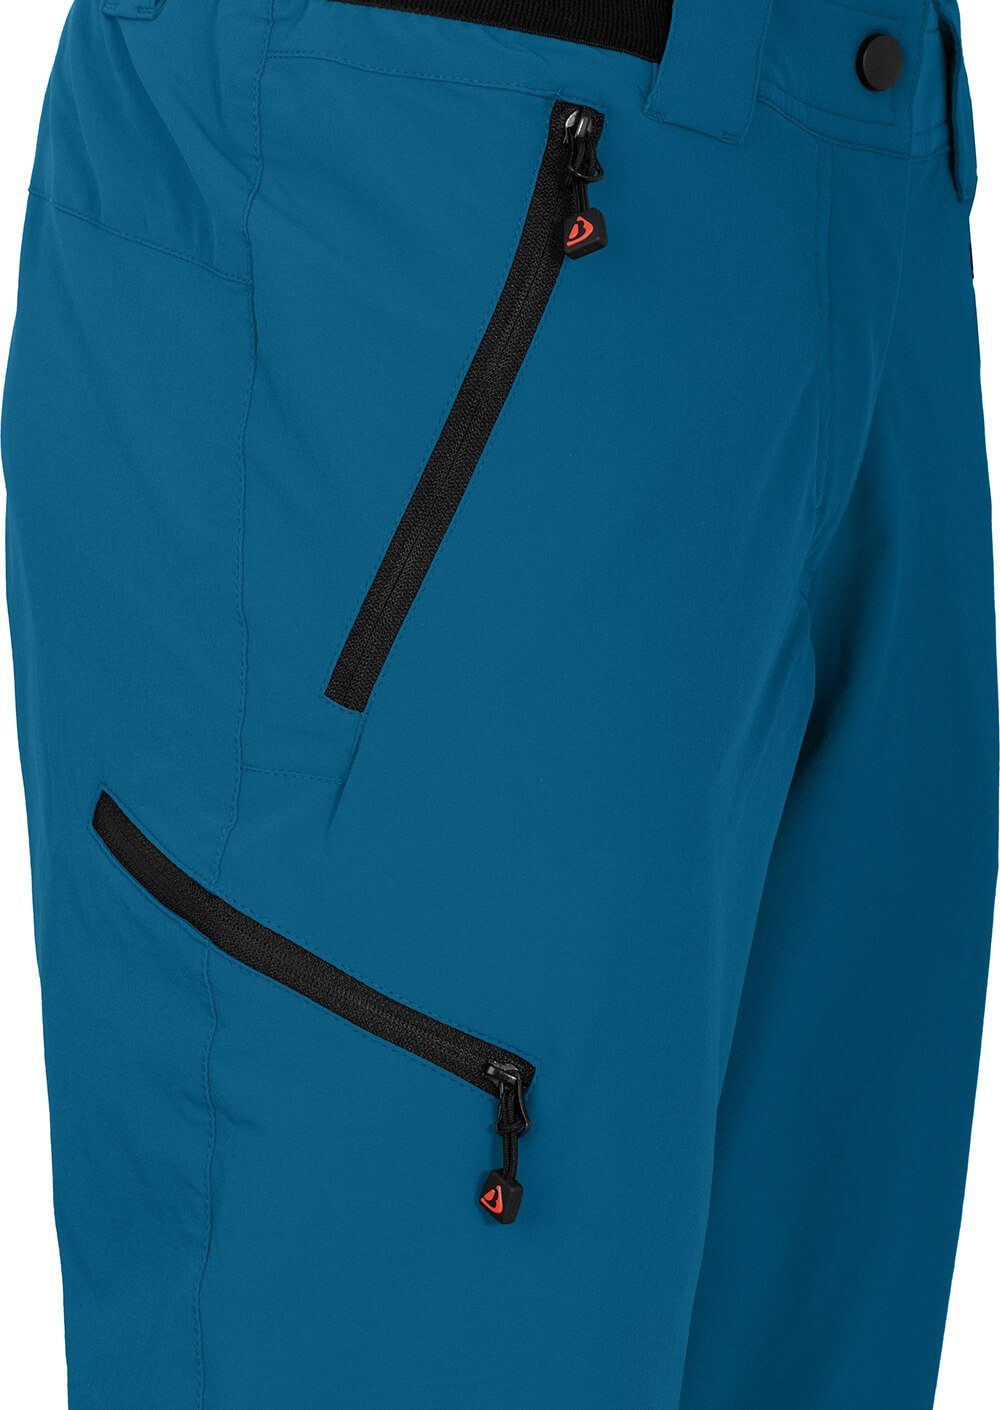 Bergson Outdoorhose VIDAA Saphir strapazierfähig, Damen Wanderhose, blau Normalgrößen, COMFORT 3/4 leicht, Capri